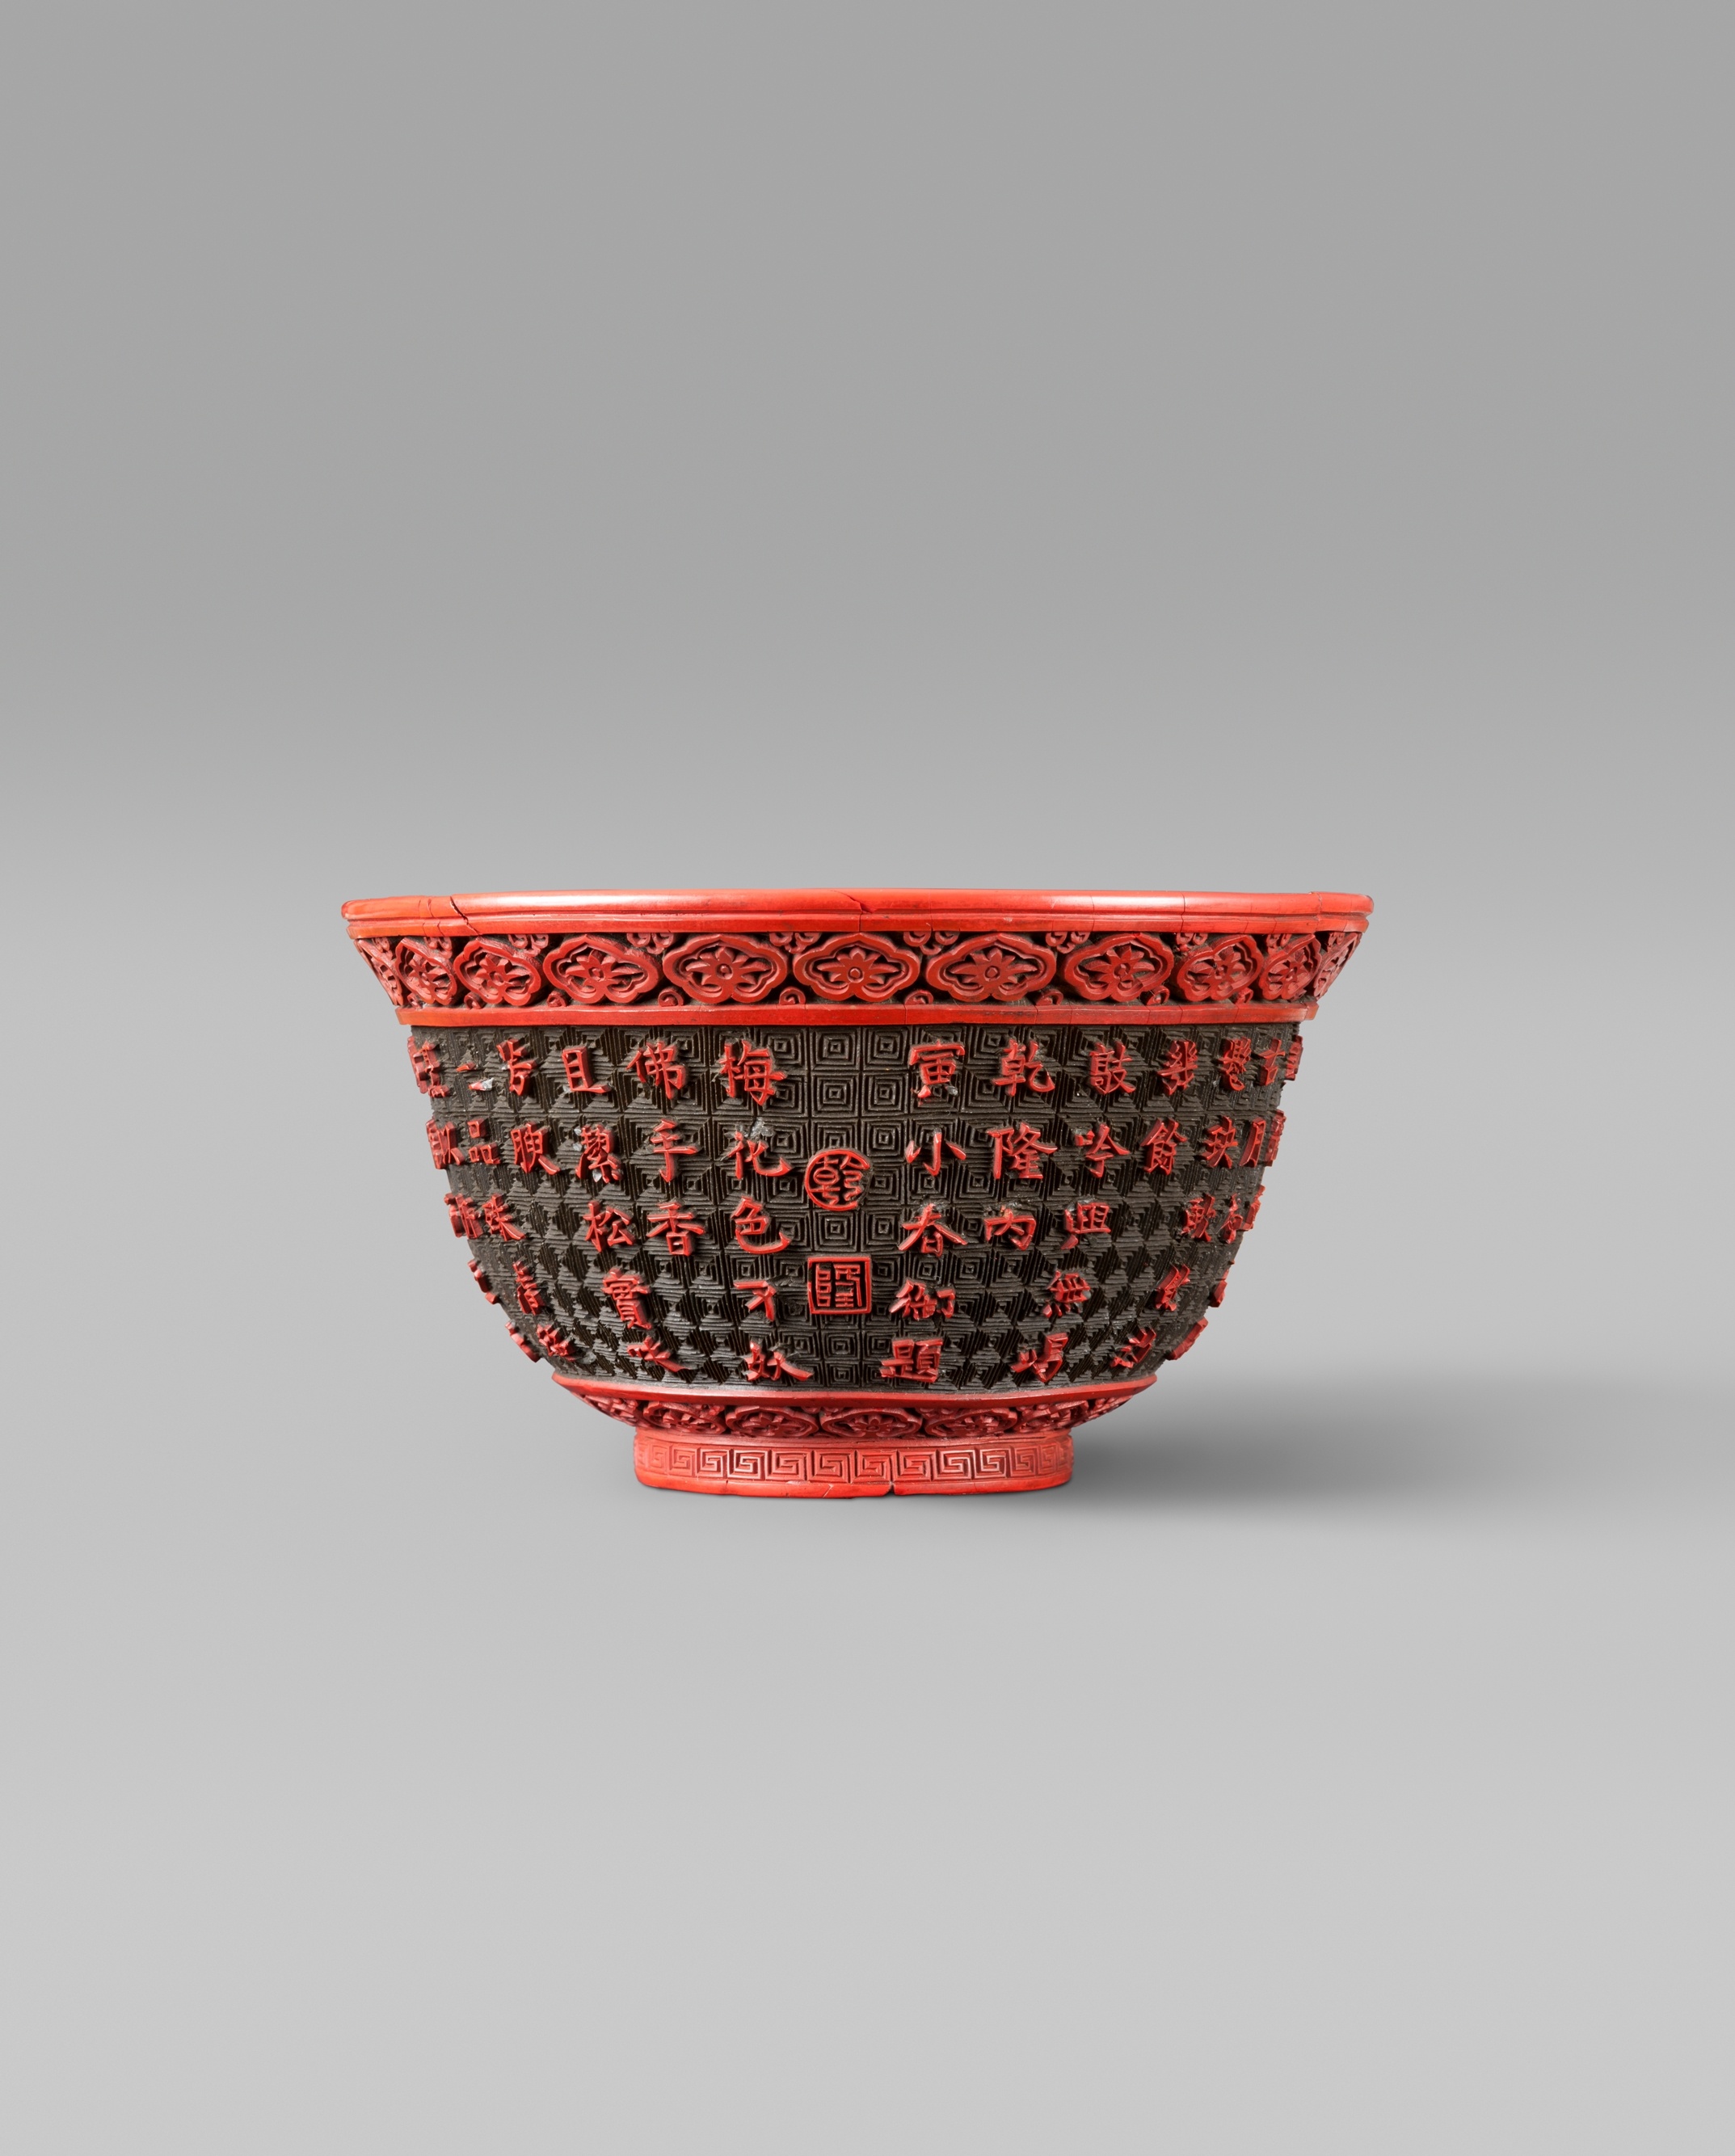 Teeschale (chawan) (Museum für Lackkunst CC BY-NC-SA)